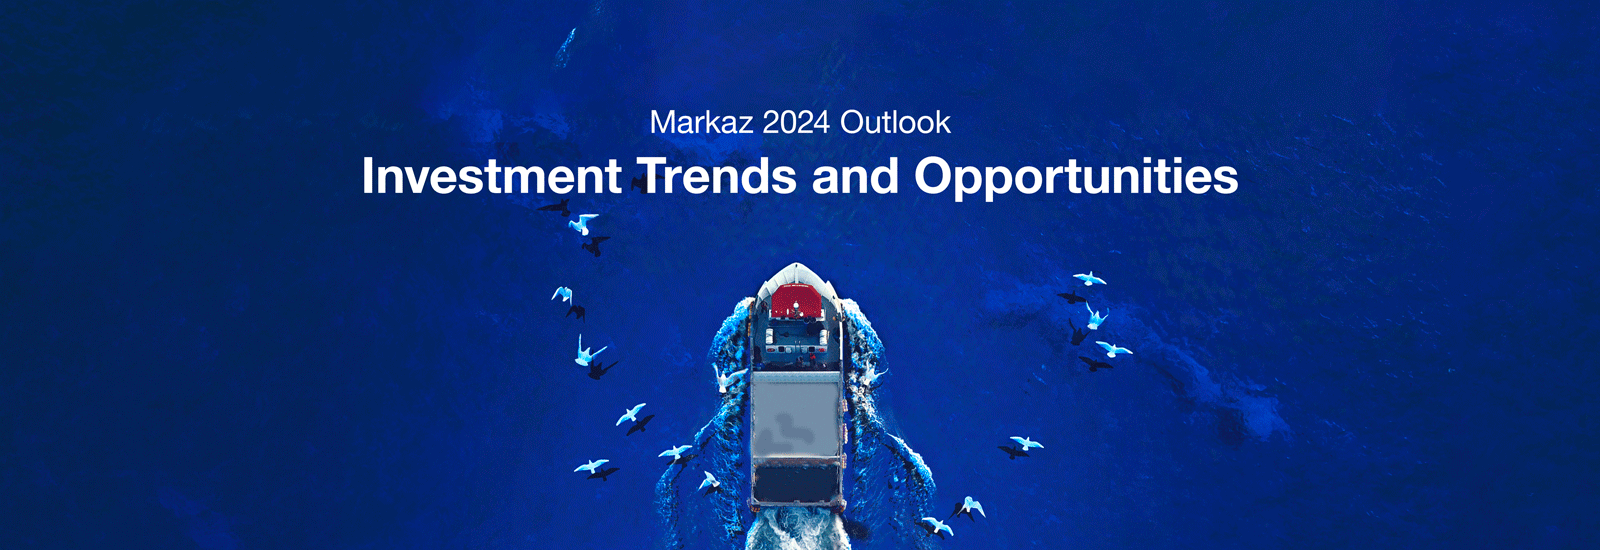 Markaz House Views 2022